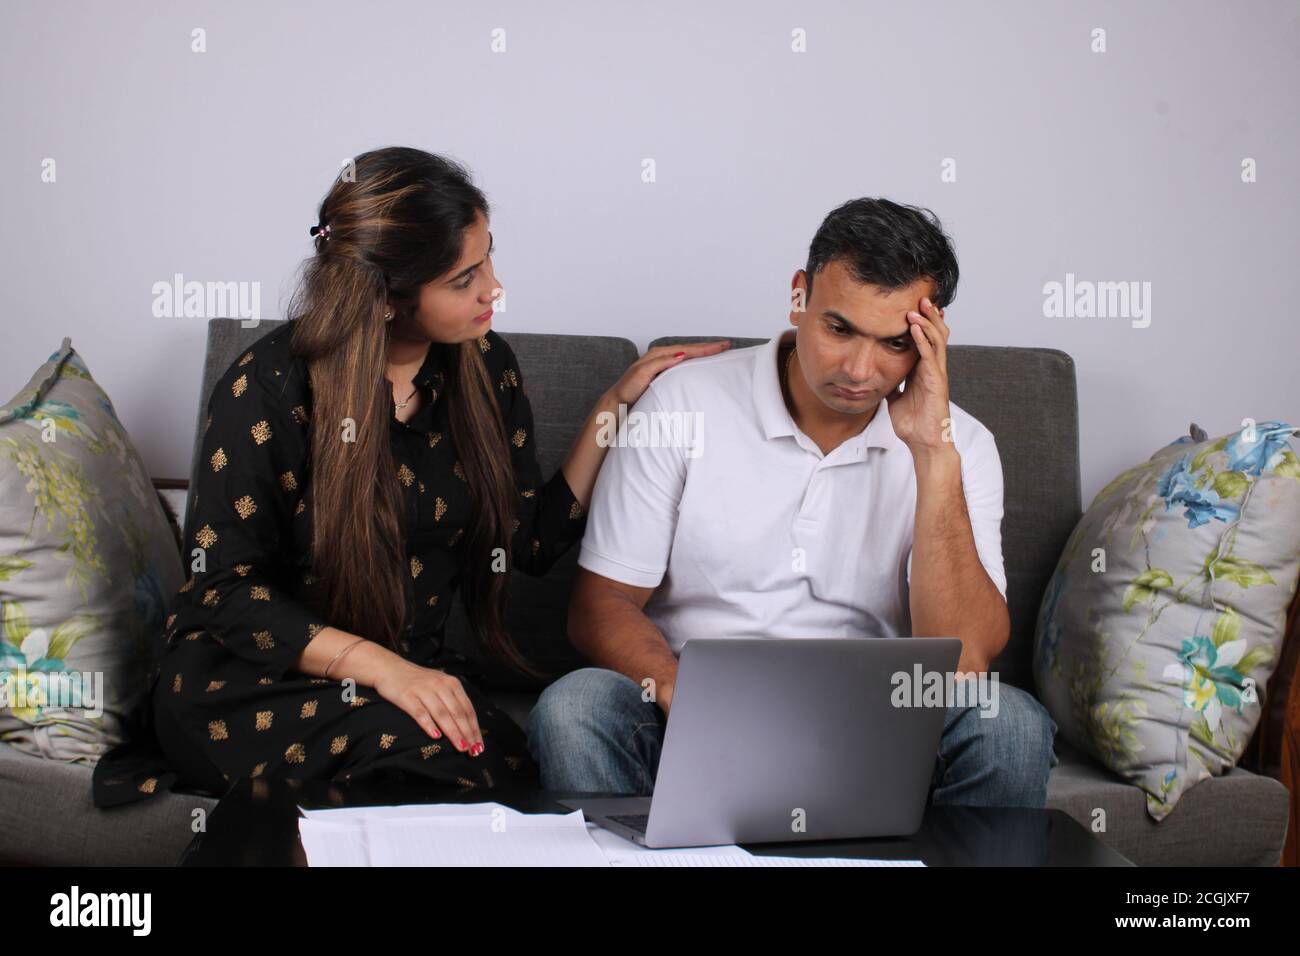 Upset couple looking at laptop on white background Stock Photo